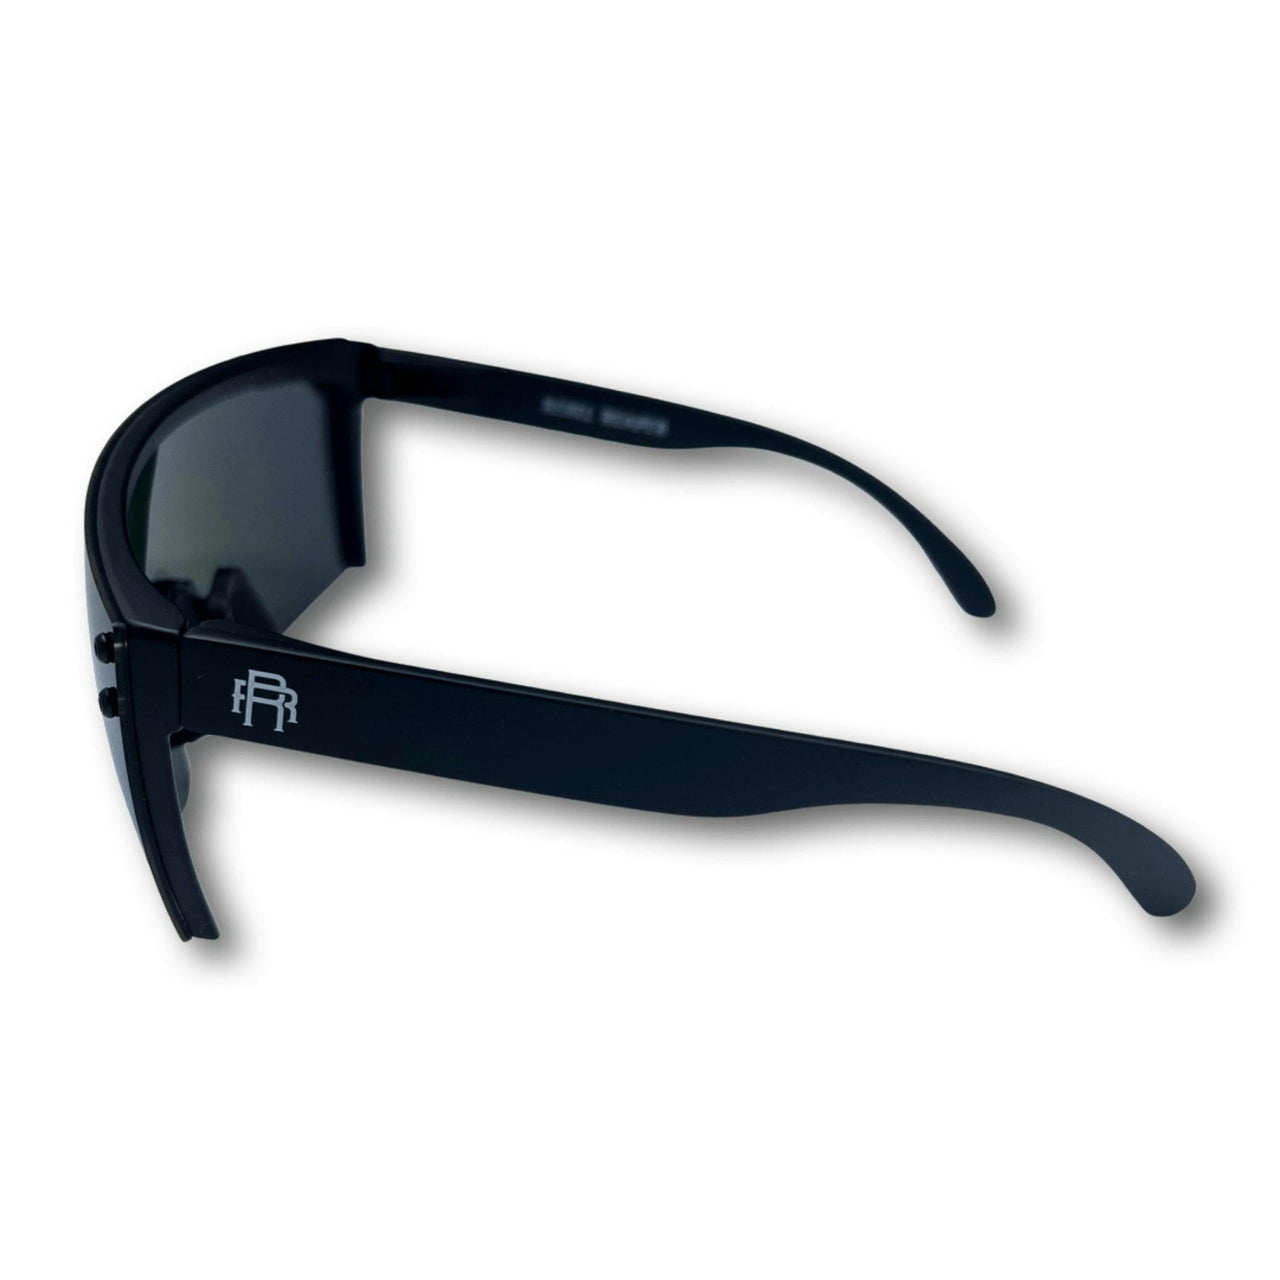 Hogans -Red Mirror Polarized Lens Sunglasses - Rebel Reaper Clothing Company Sunglasses